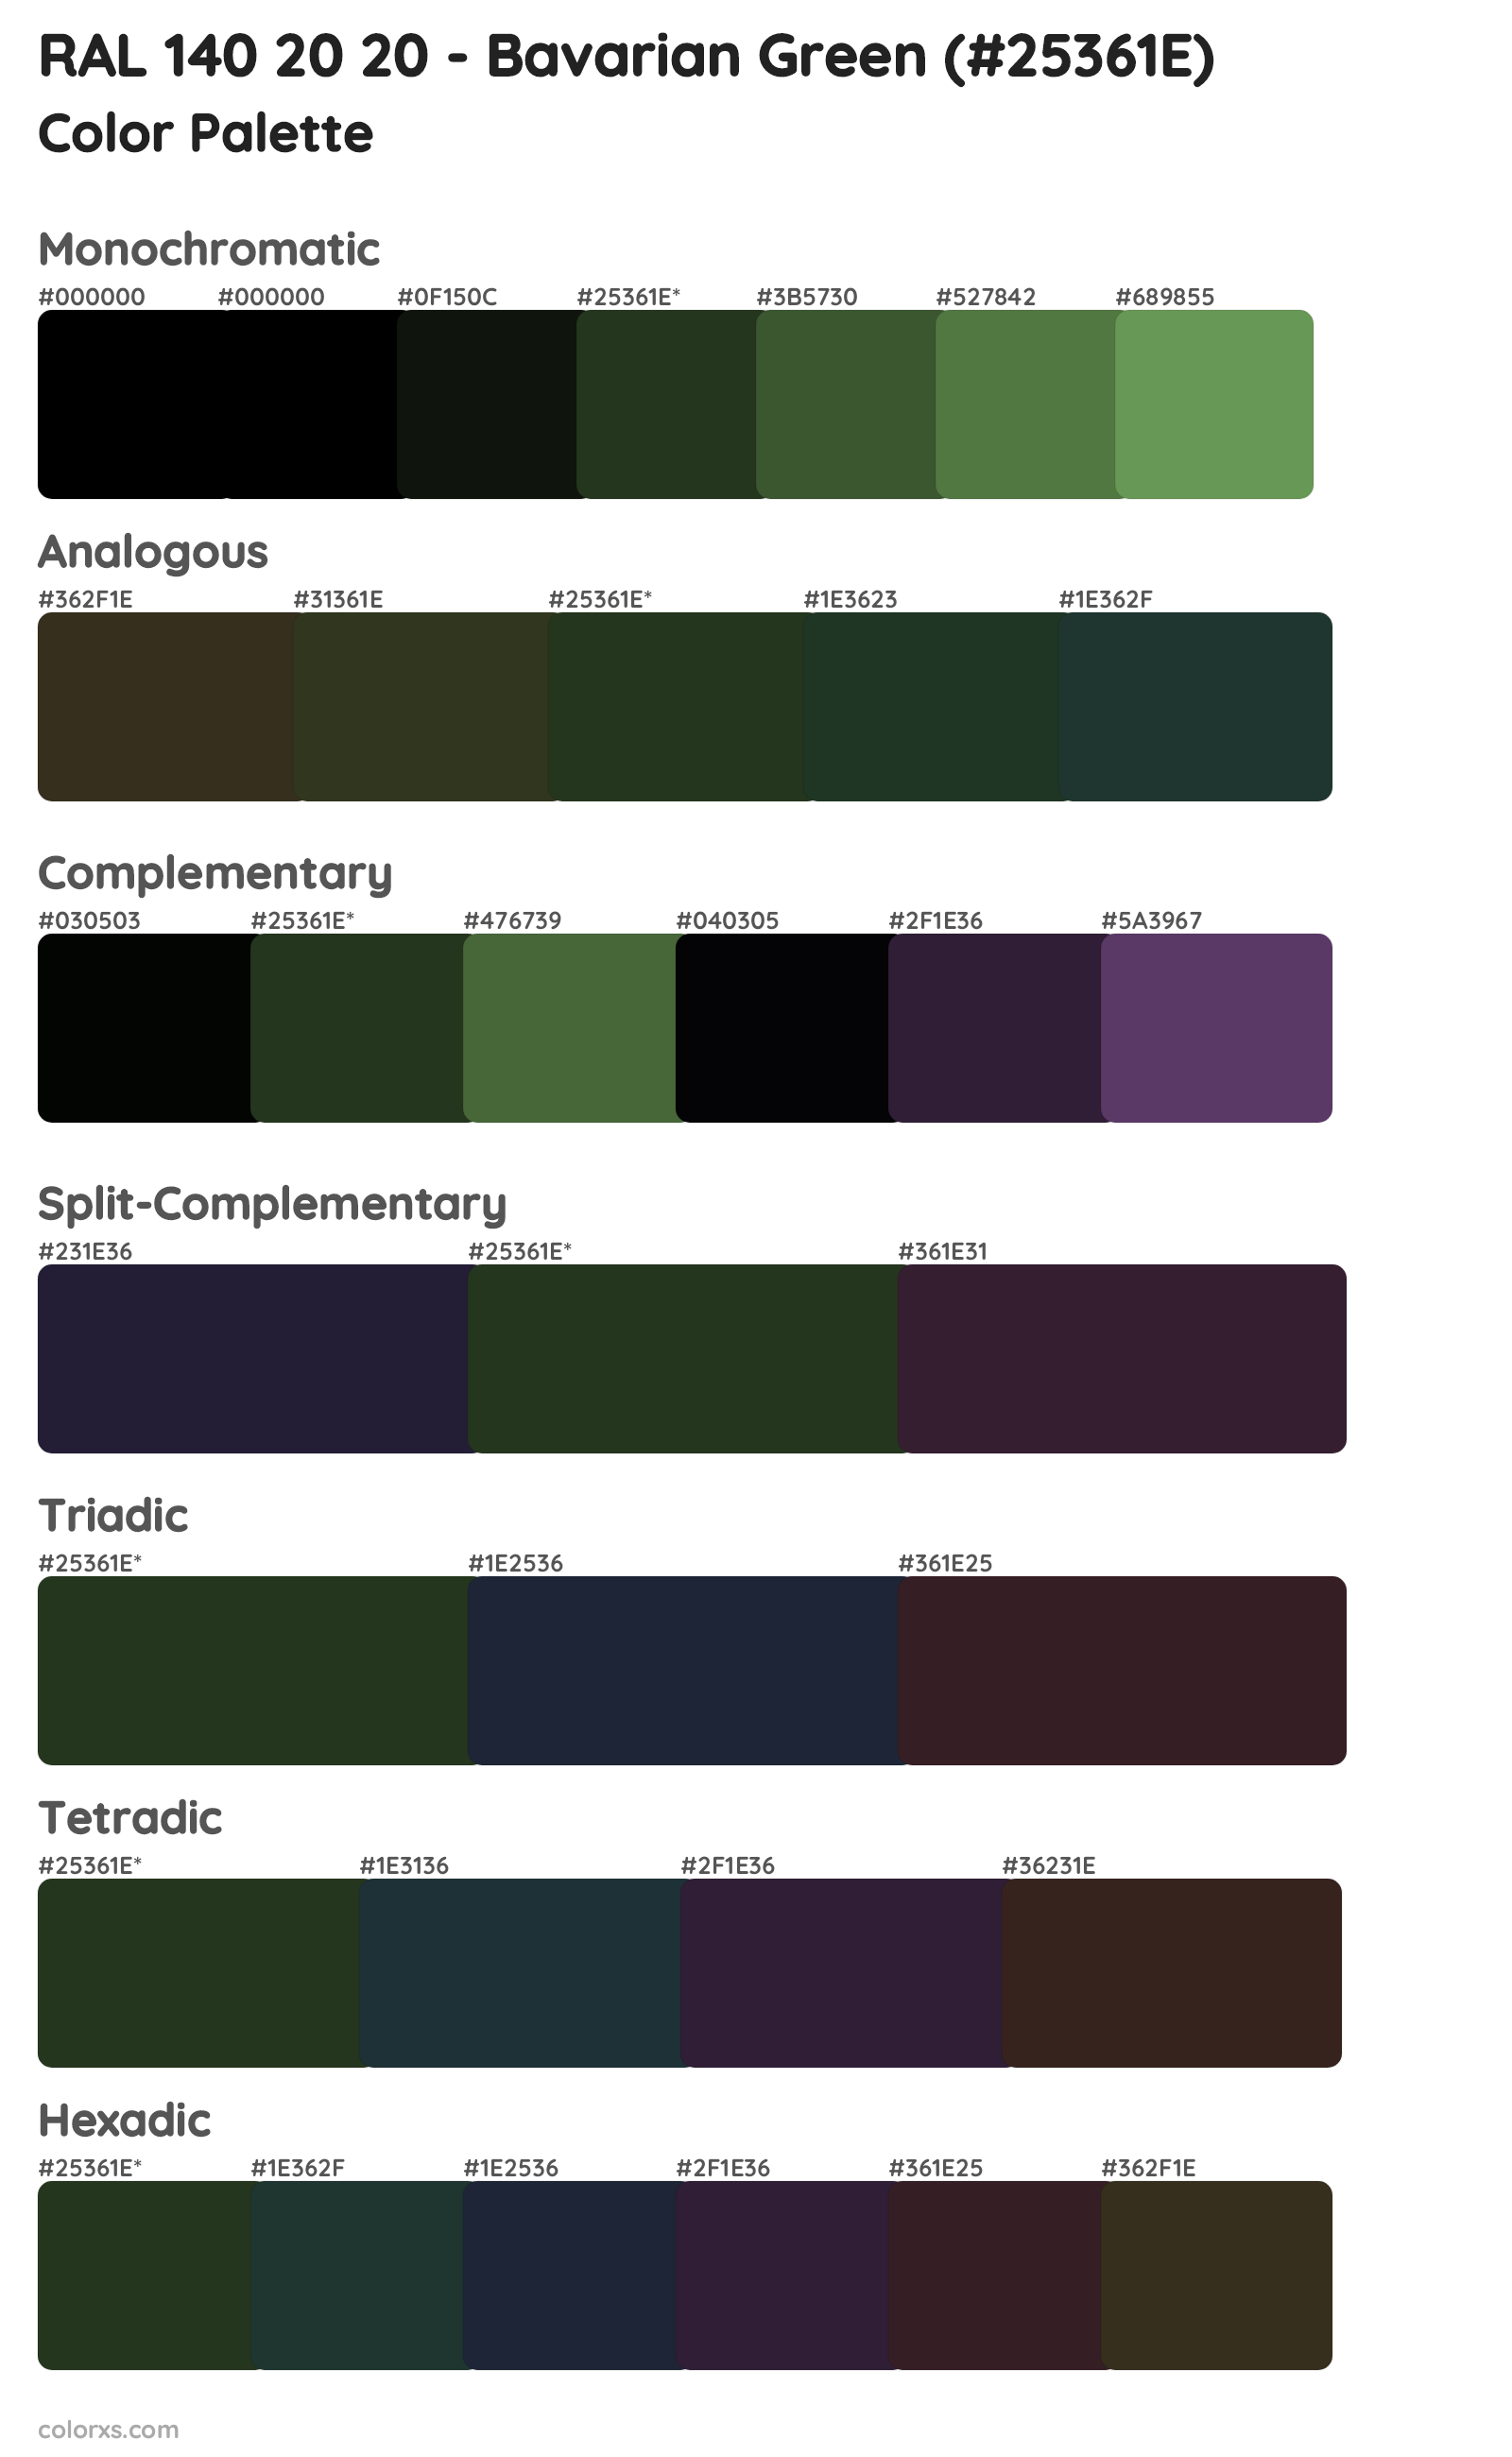 RAL 140 20 20 - Bavarian Green Color Scheme Palettes